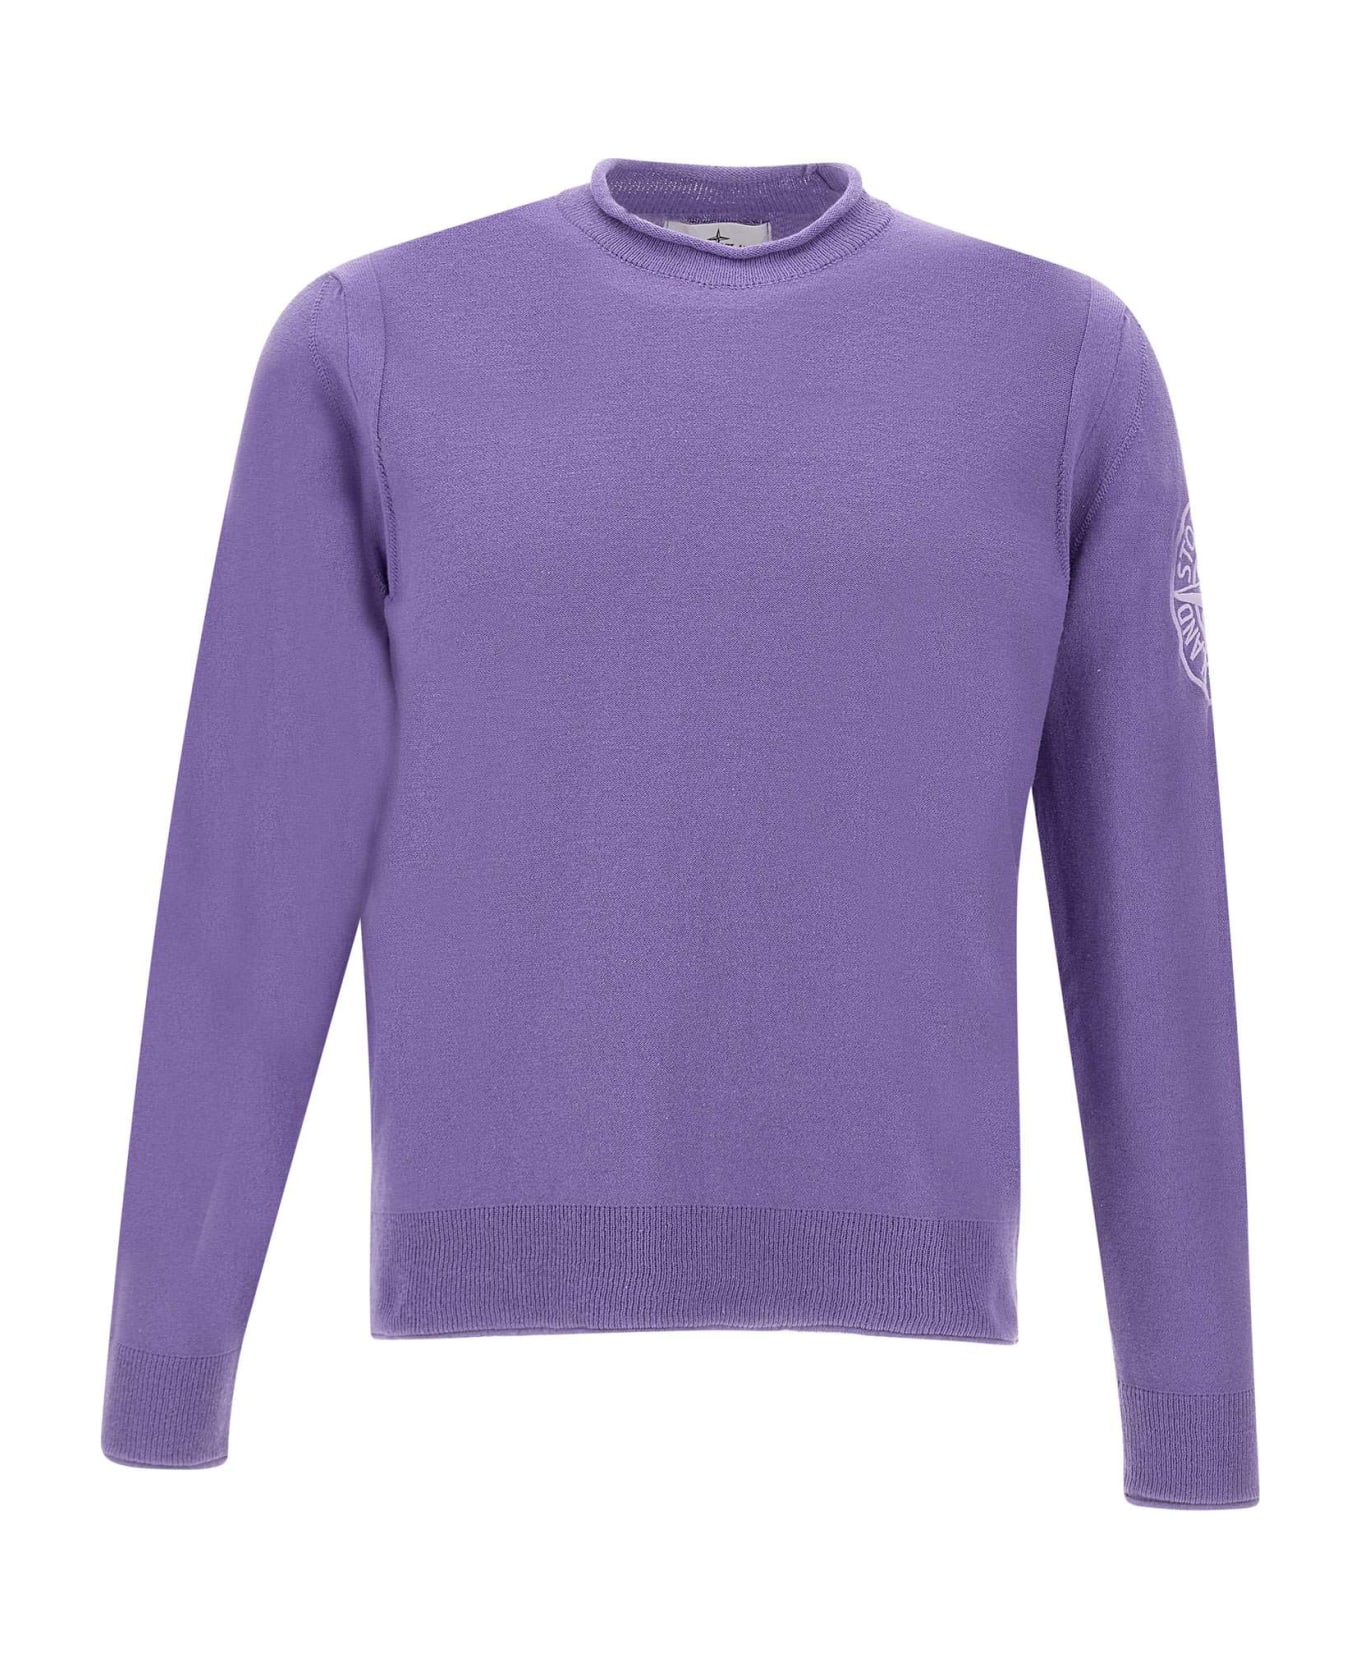 Stone Island Organic Cotton Sweater - LILAC ニットウェア